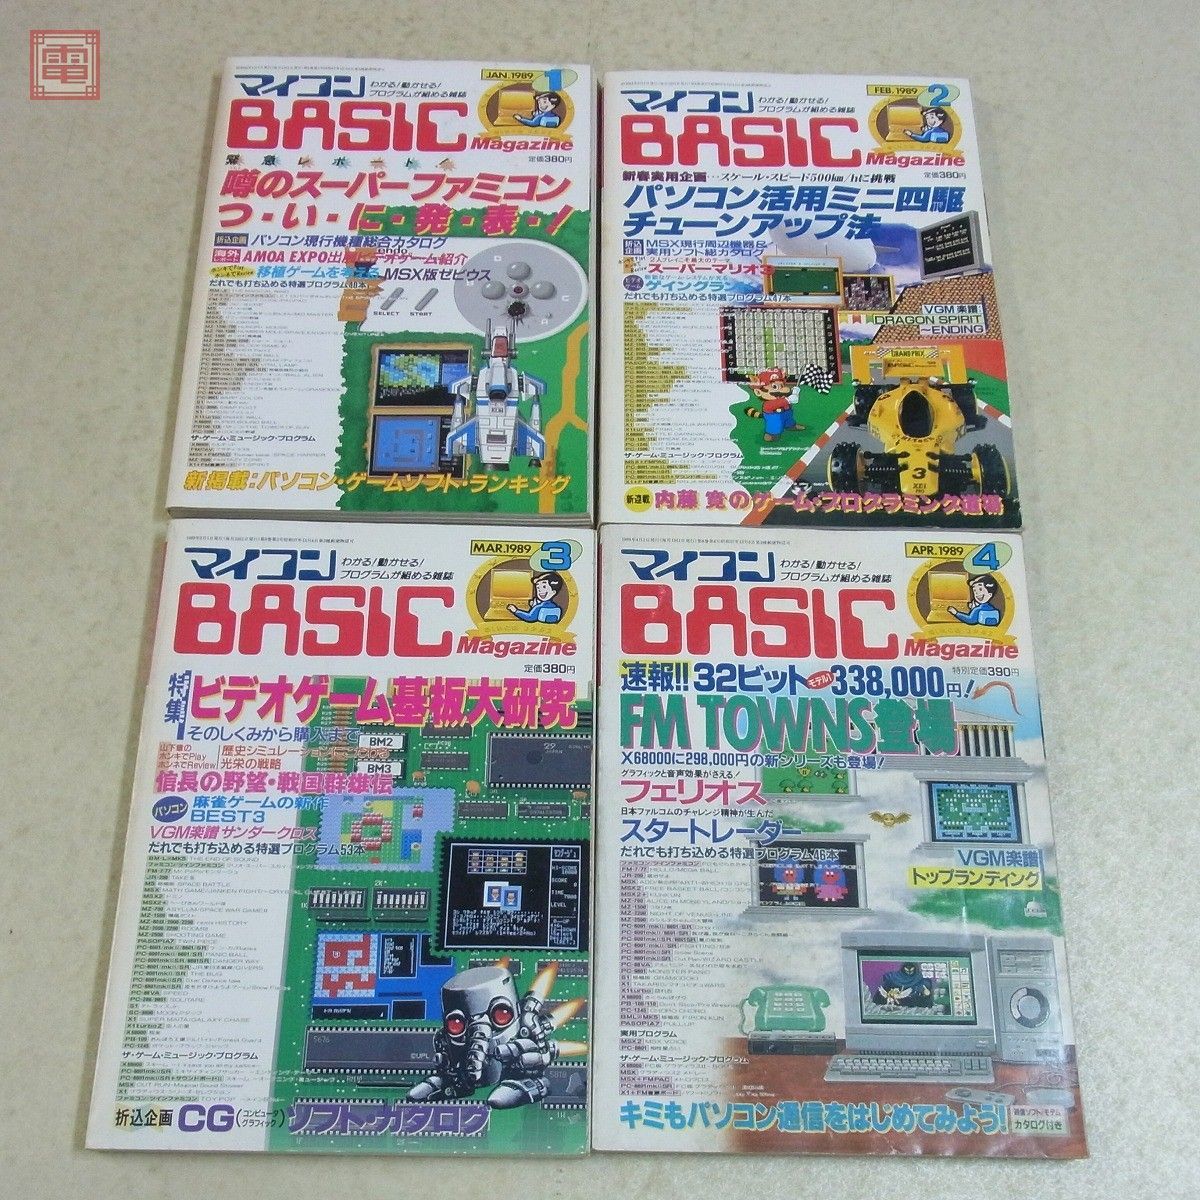  журнал microcomputer BASIC журнал 1989 год 12 шт. комплект через год .. беж maga радиоволны газета фирма [20